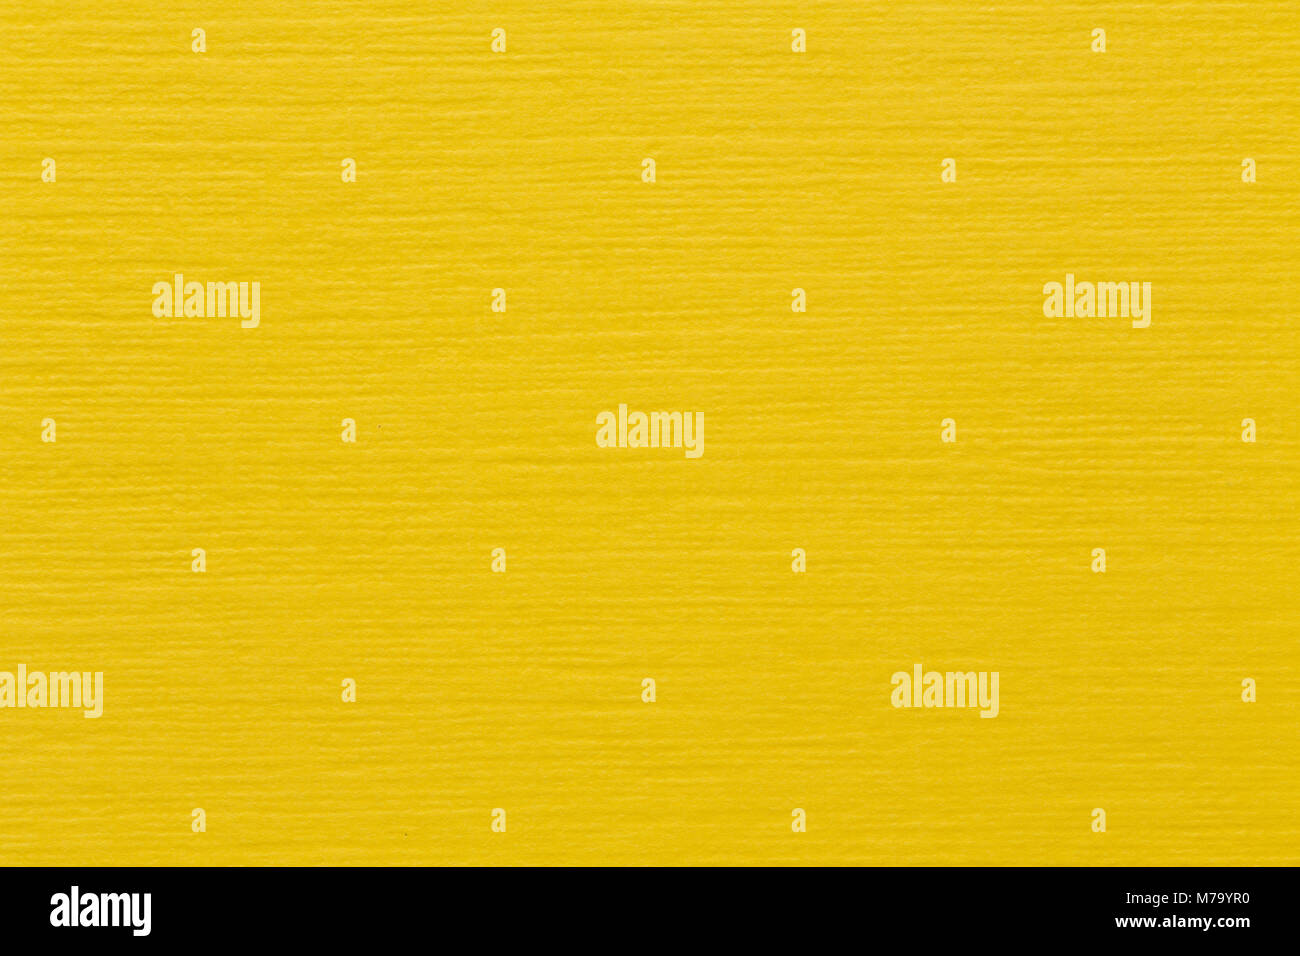 Texture of light yellow paper Stock Photo - Alamy